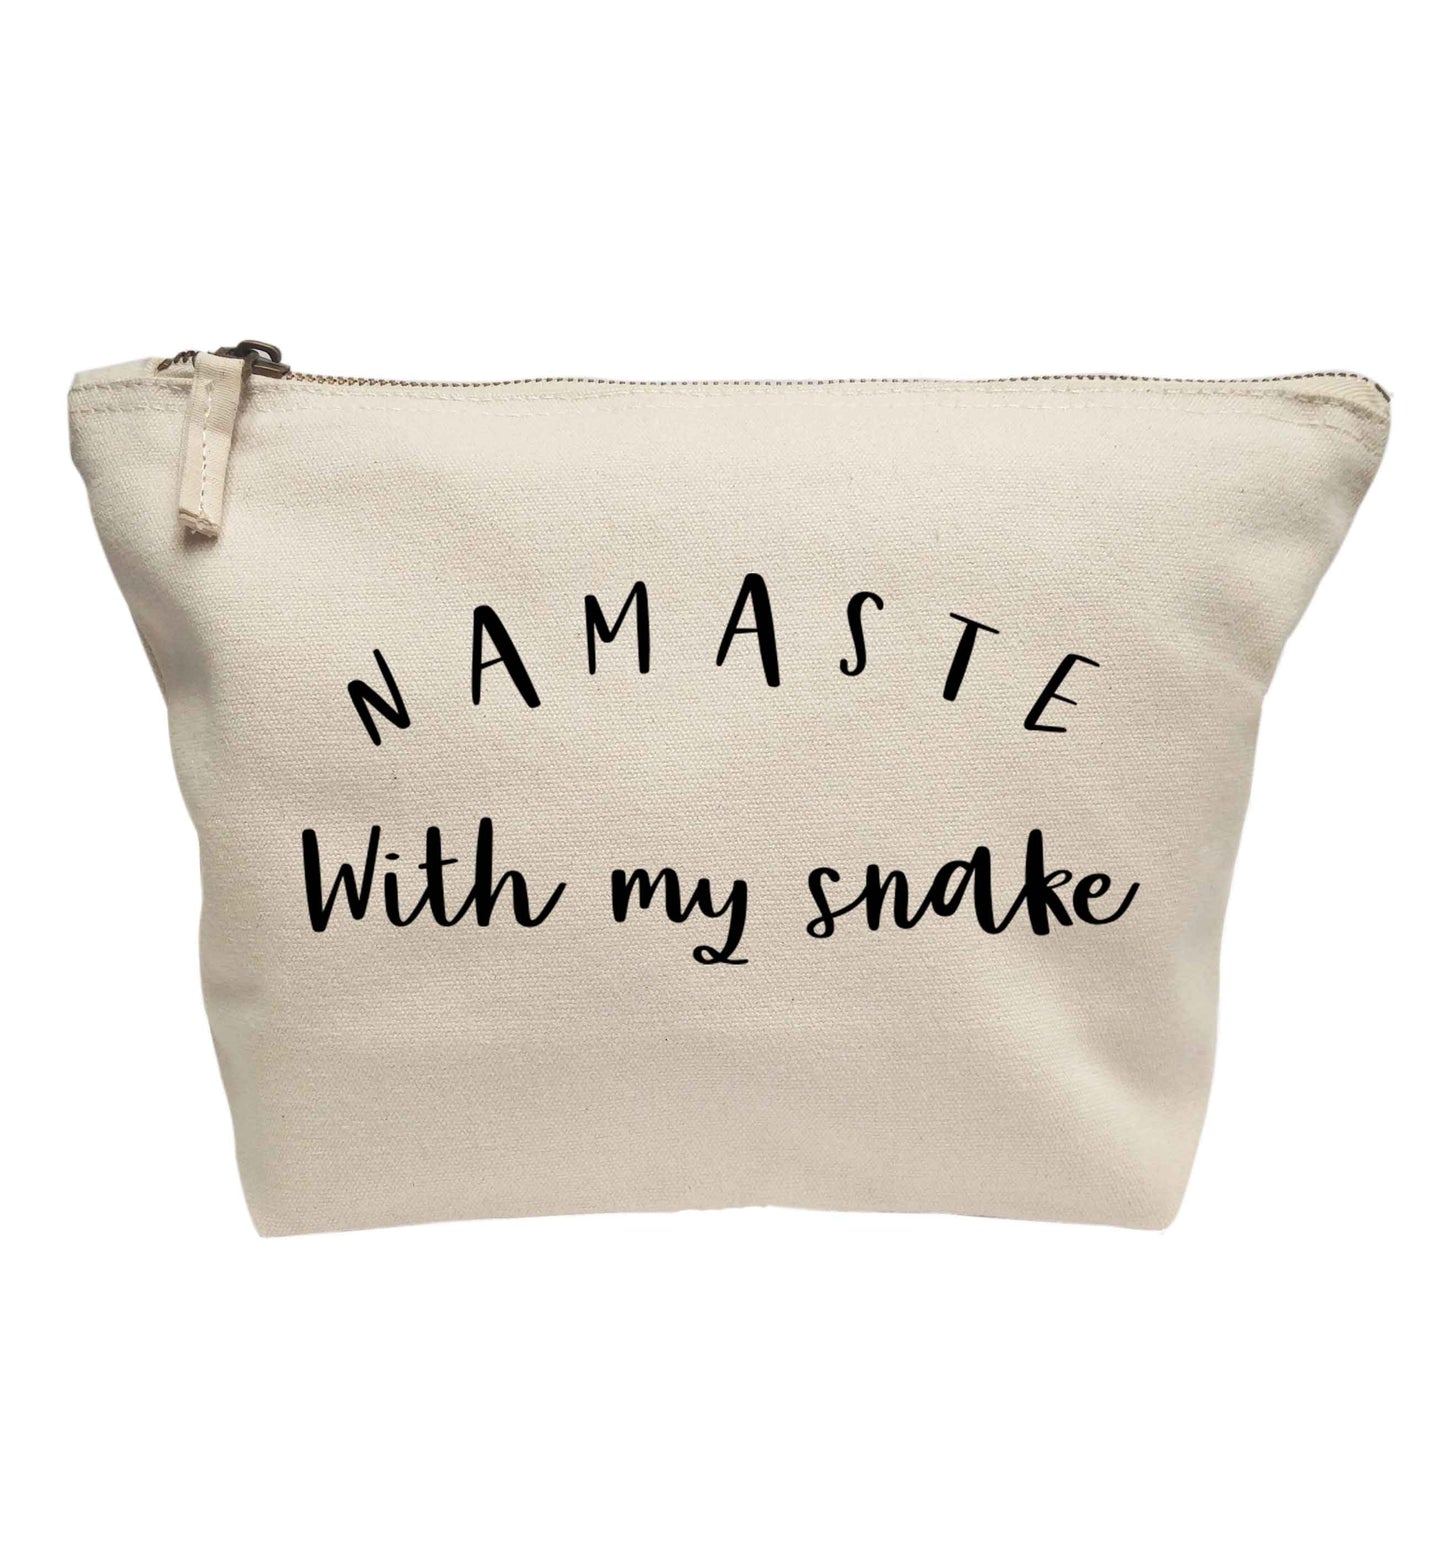 Namaste with my snake | makeup / wash bag